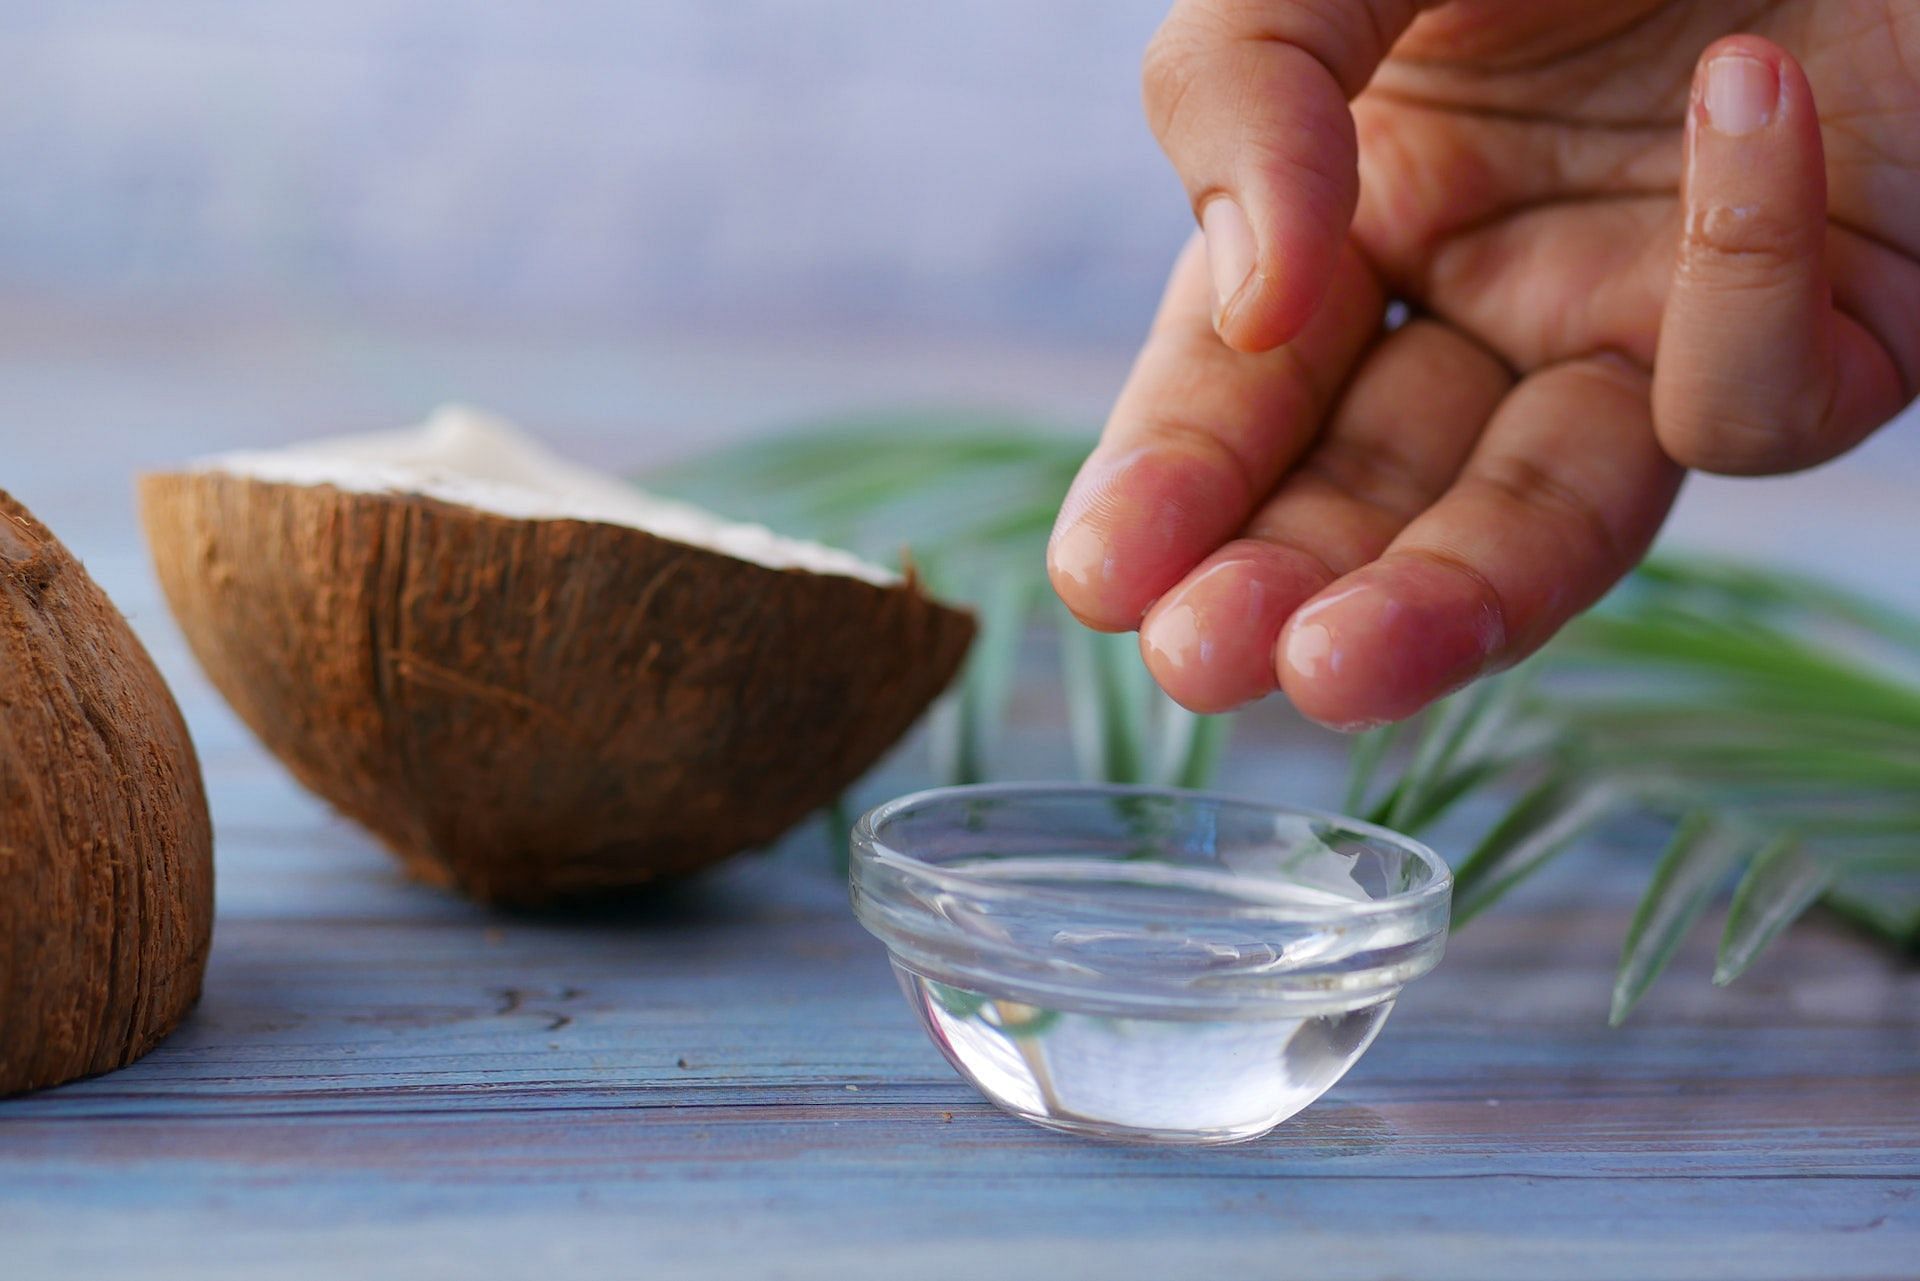 Applying coconut oil is the best treatment for stye in the eye. (Photo via Pexels/Towfiqu barbhuiya)